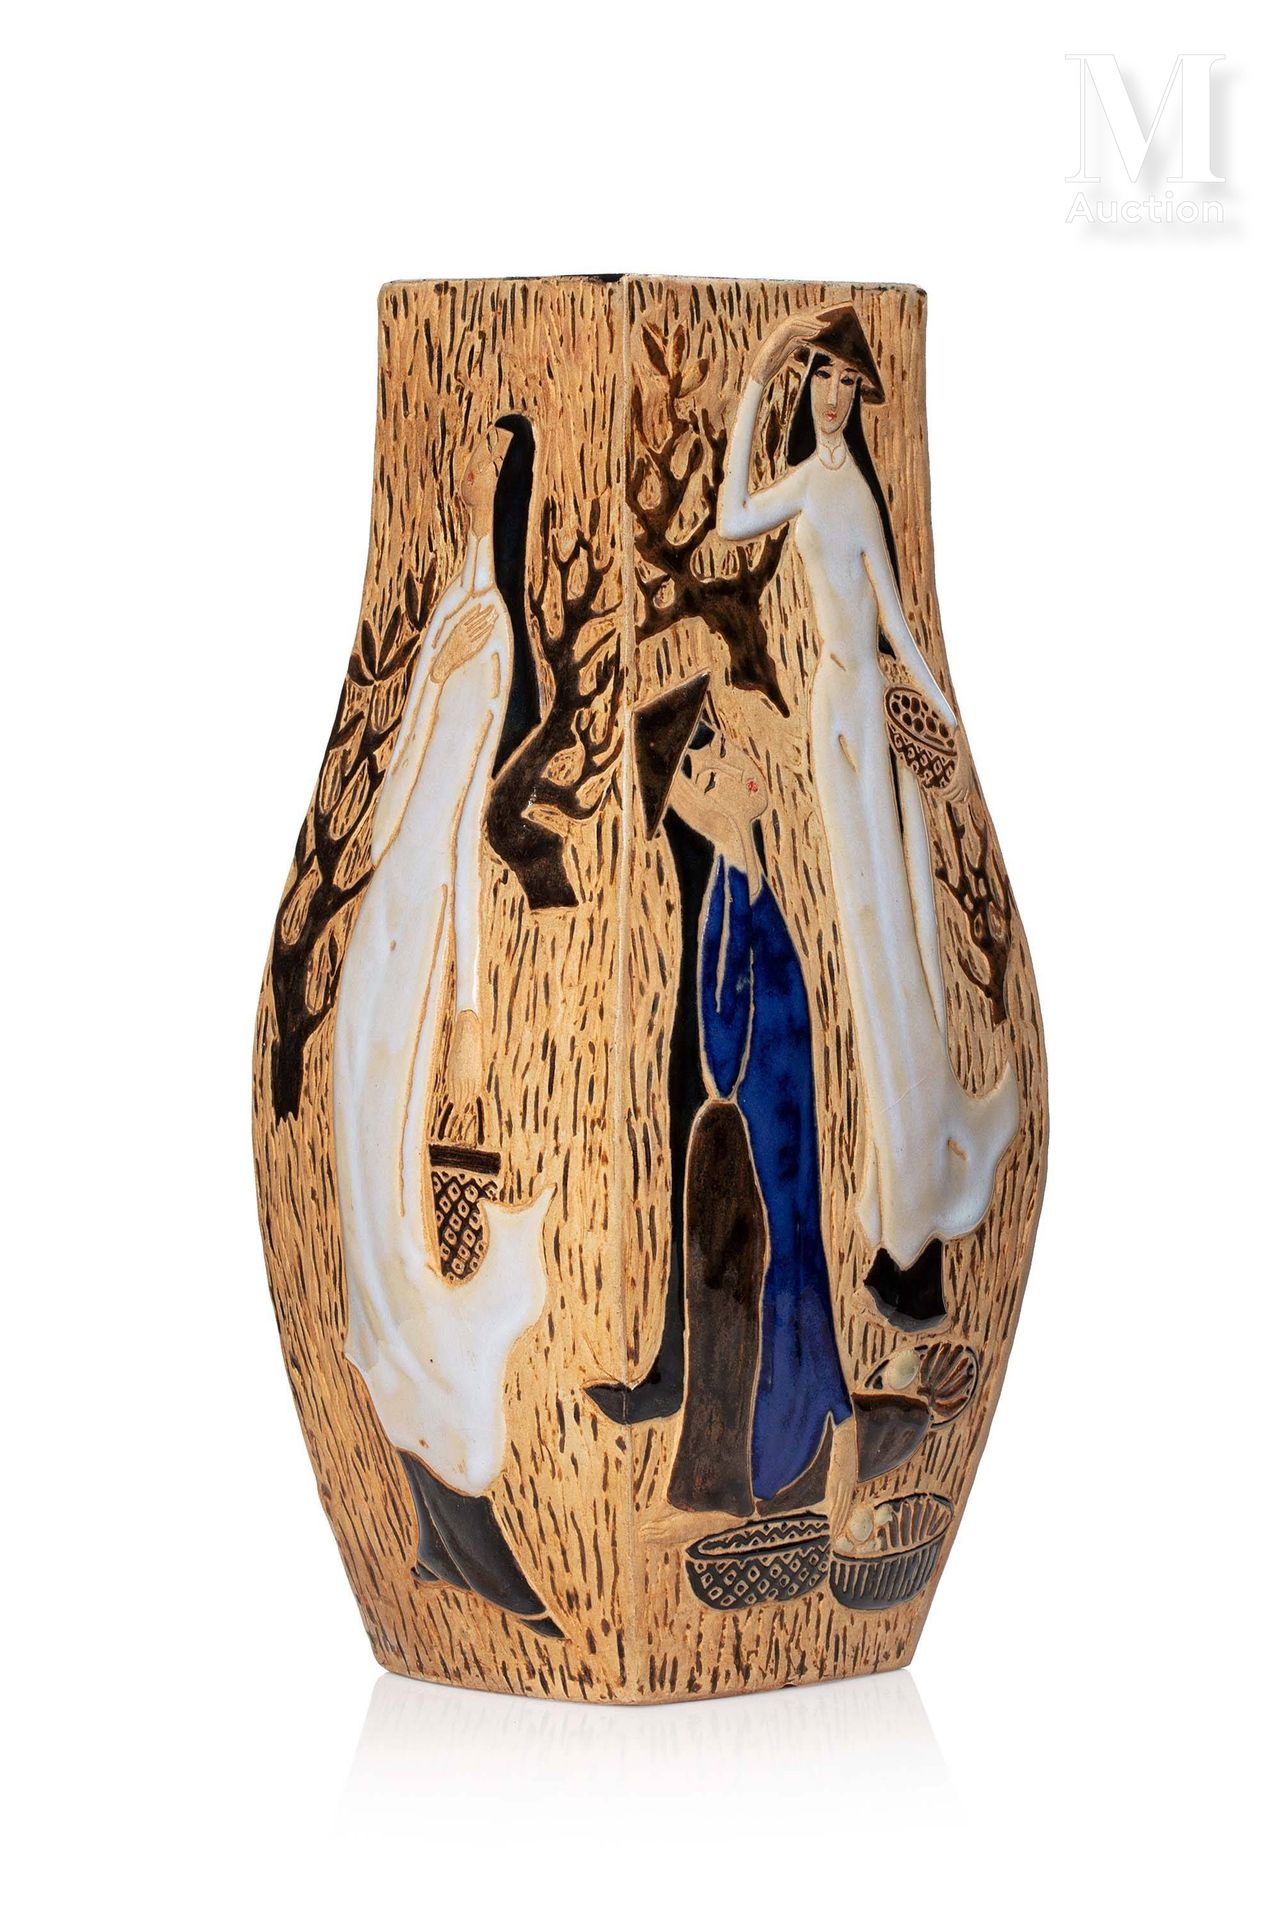 VIETNAM, XXe siècle, Élégant vase en grès de Bien Hoa 带有农民妇女的浮雕装饰

底座下的印记

在边华生产&hellip;